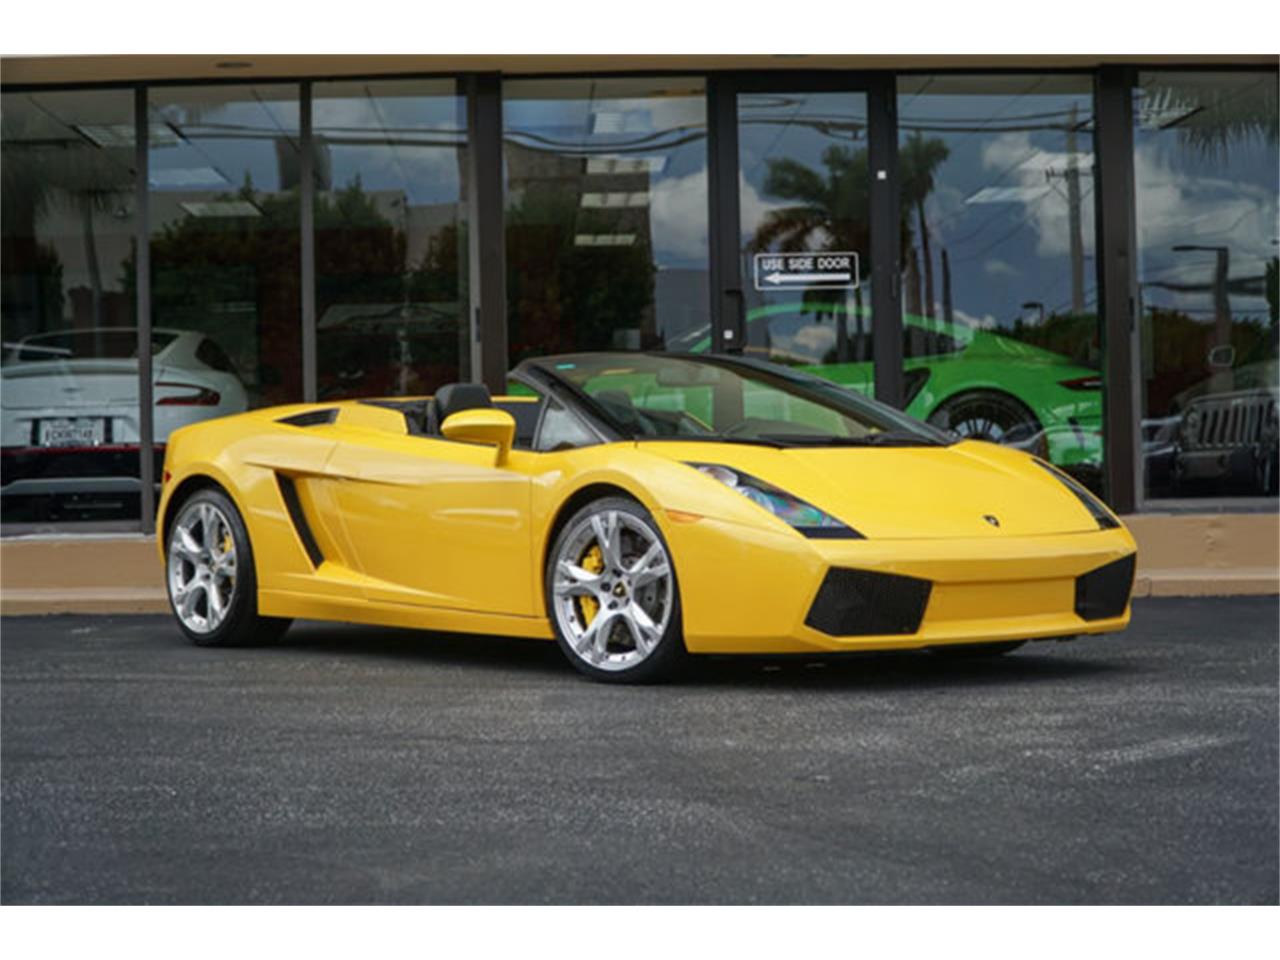 2007 Lamborghini Gallardo for Sale | ClassicCars.com | CC ...